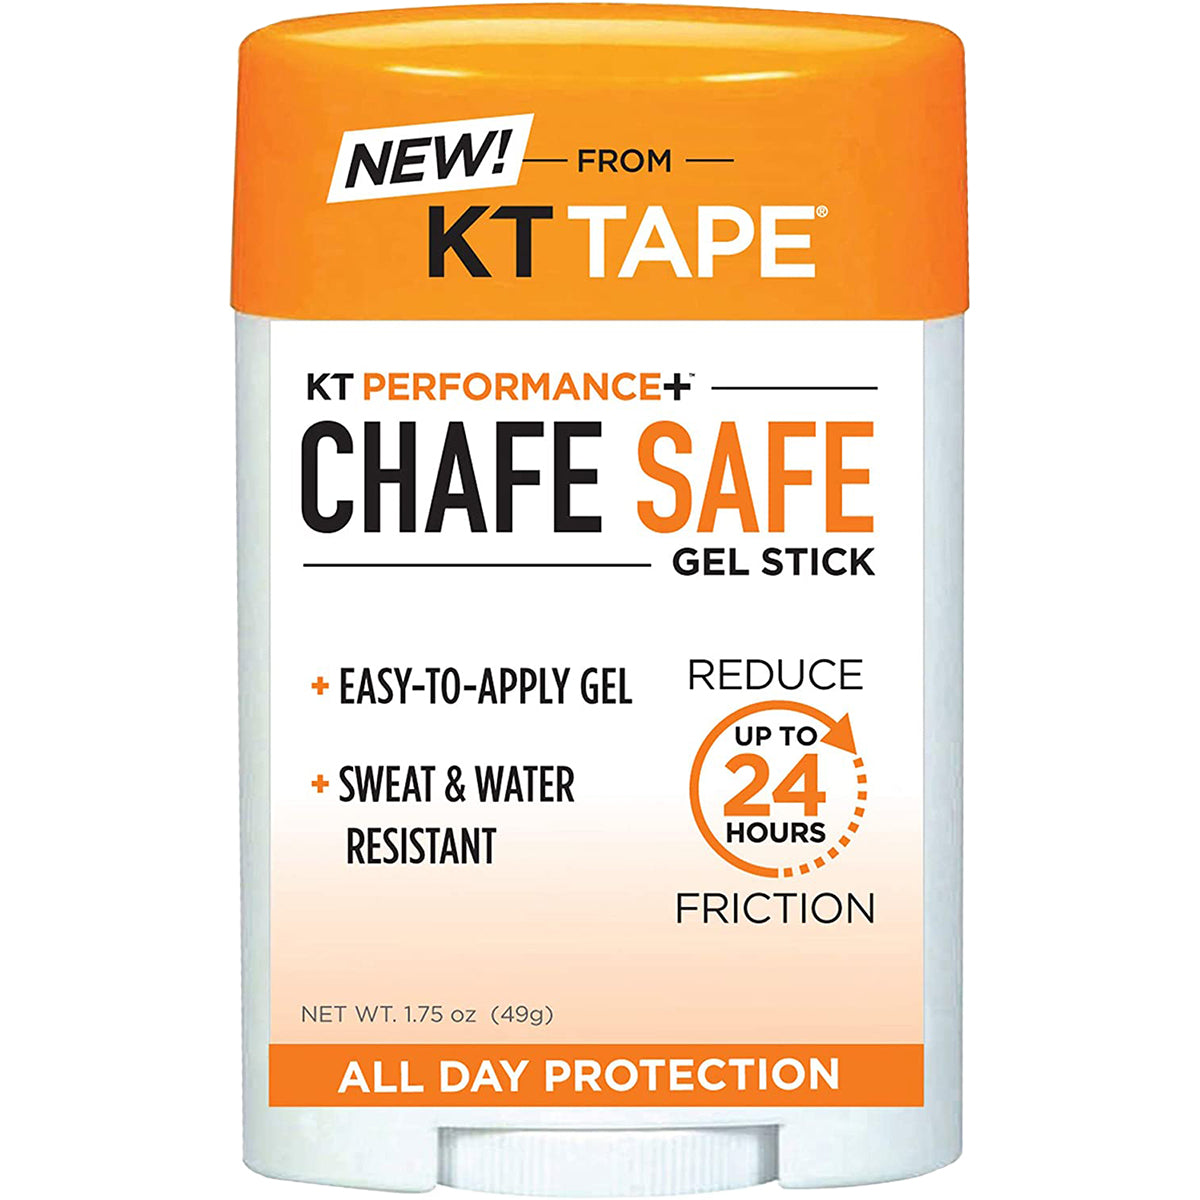 KT Tape Performance+ Chafe Safe Anti-Chafing Gel Stick KT Tape